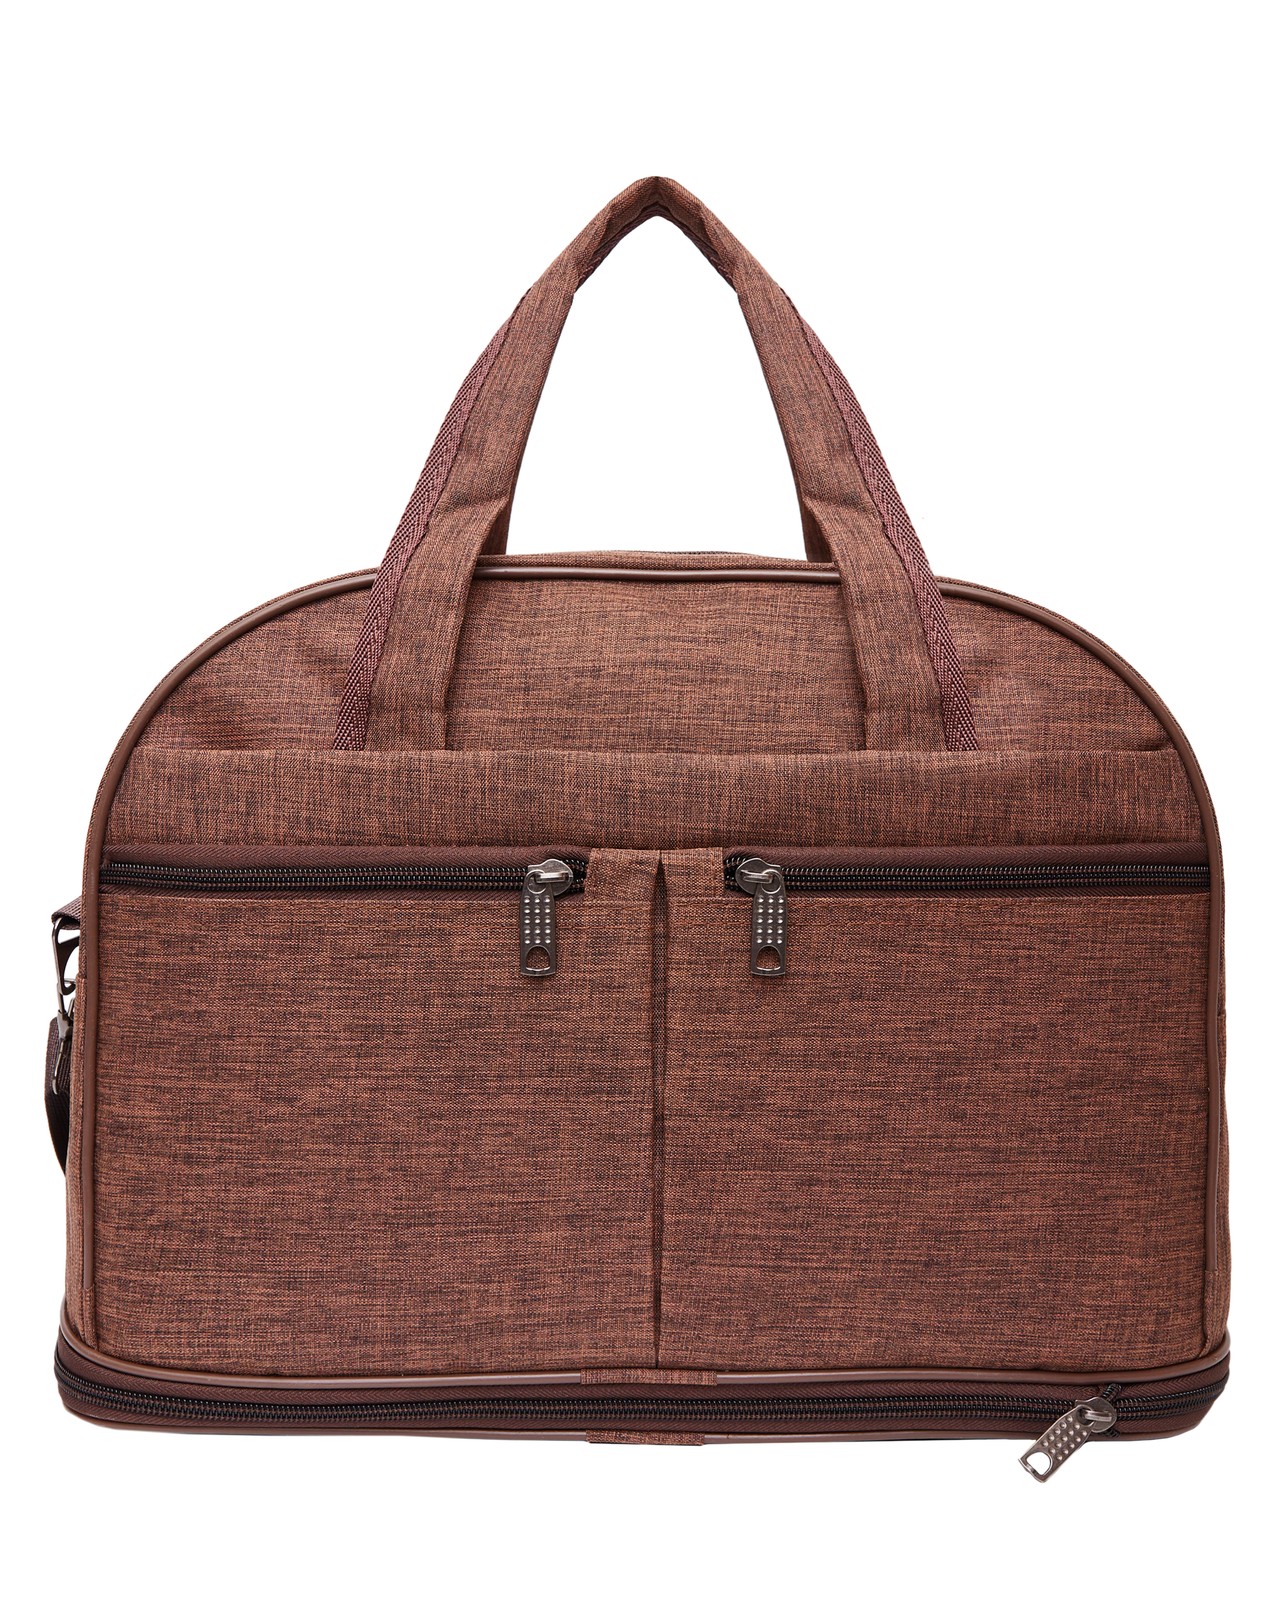 

Дорожная сумка унисекс BAGS-ART LM 40-48 коричневая, 30x44x22 см, Коричневый, LM 40-48